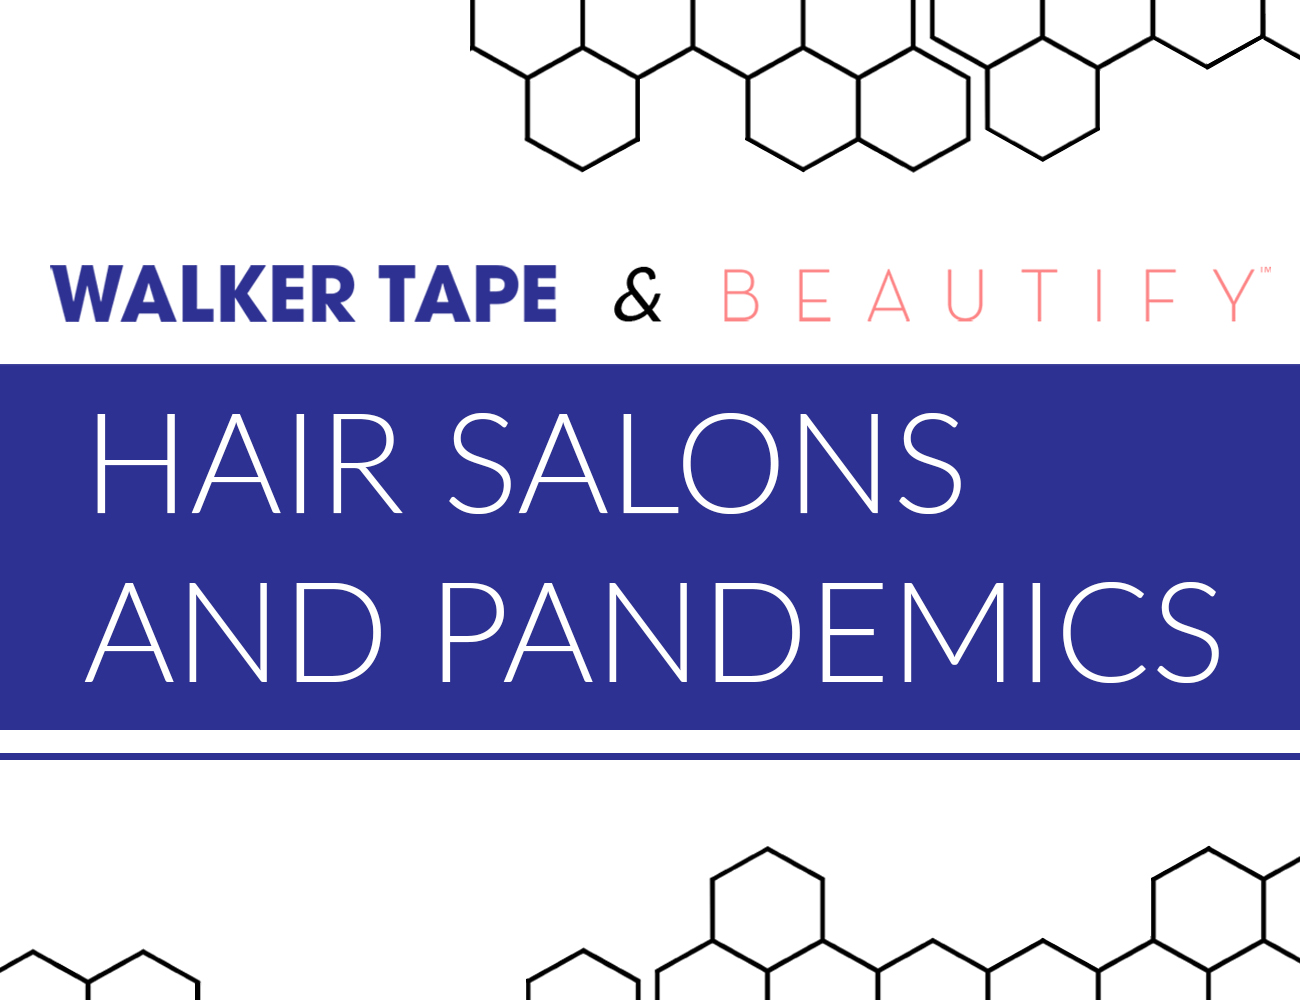 Salons and Pandemics Blog